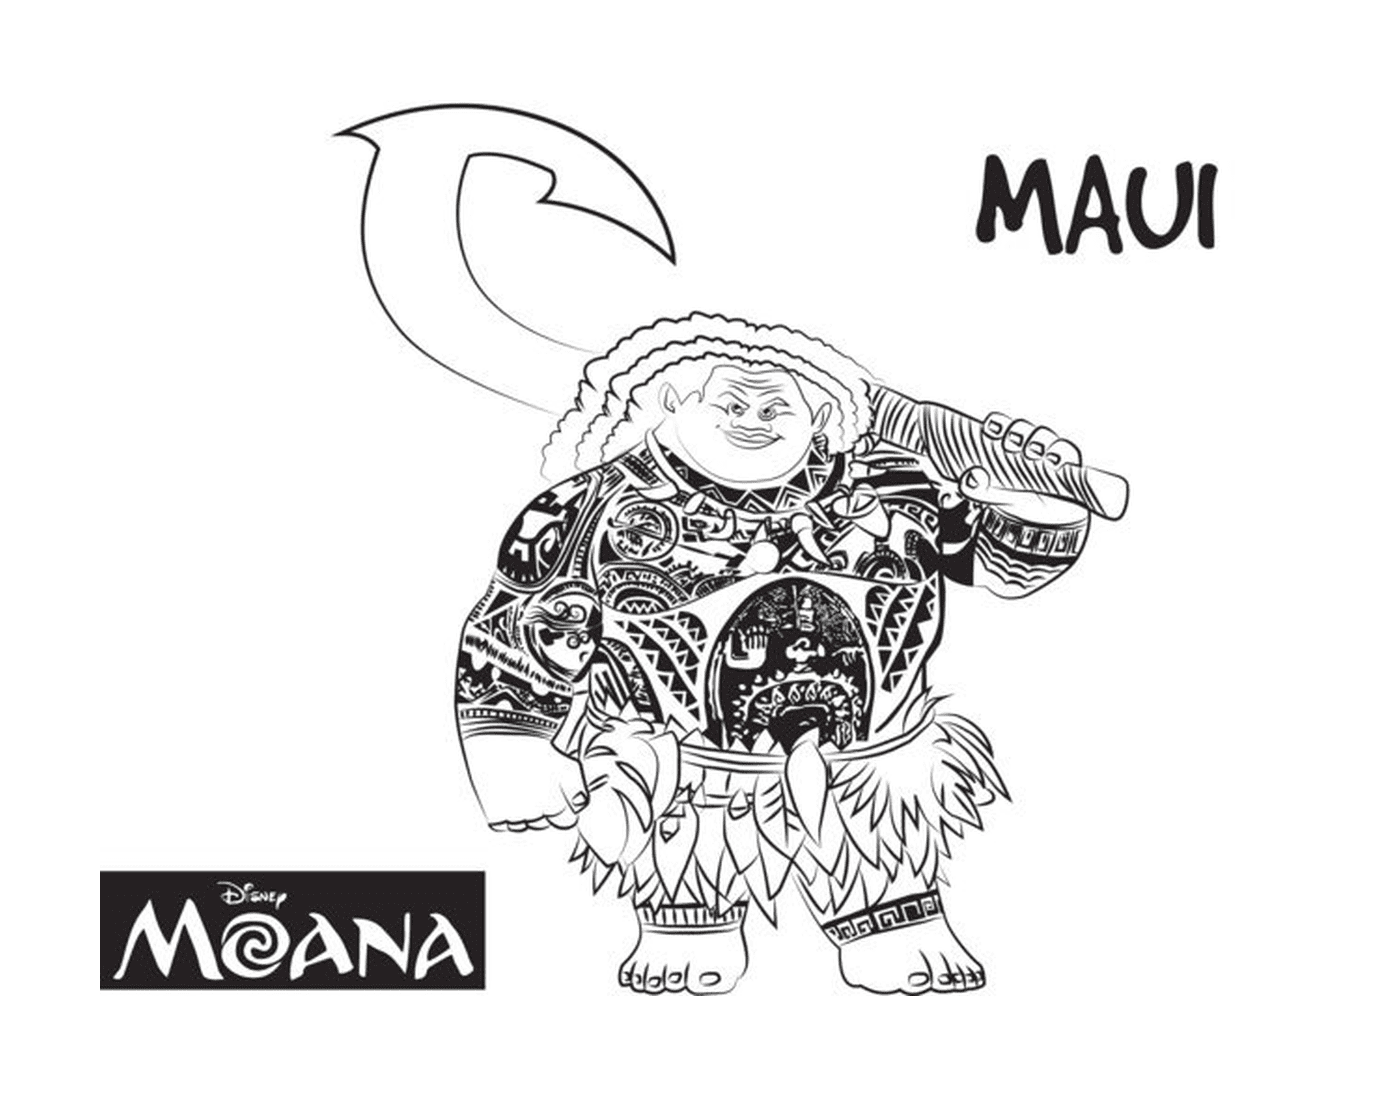  Maui, Starker von Moana 